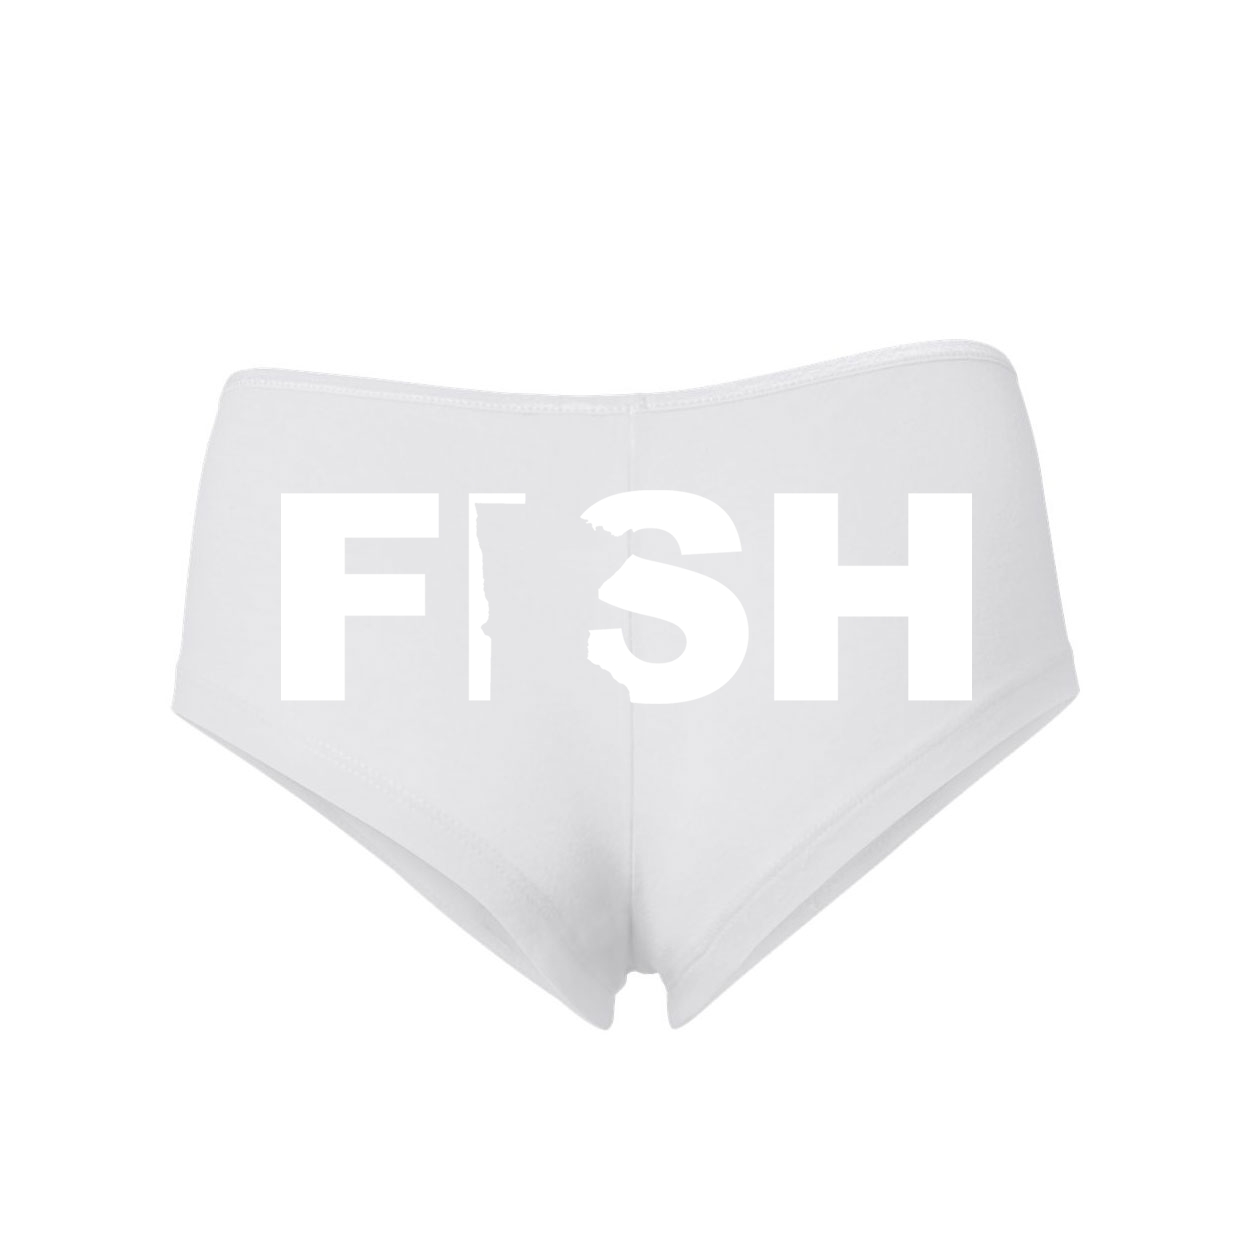 Fish Minnesota Classic Women's Booty Shorts White (White Logo)